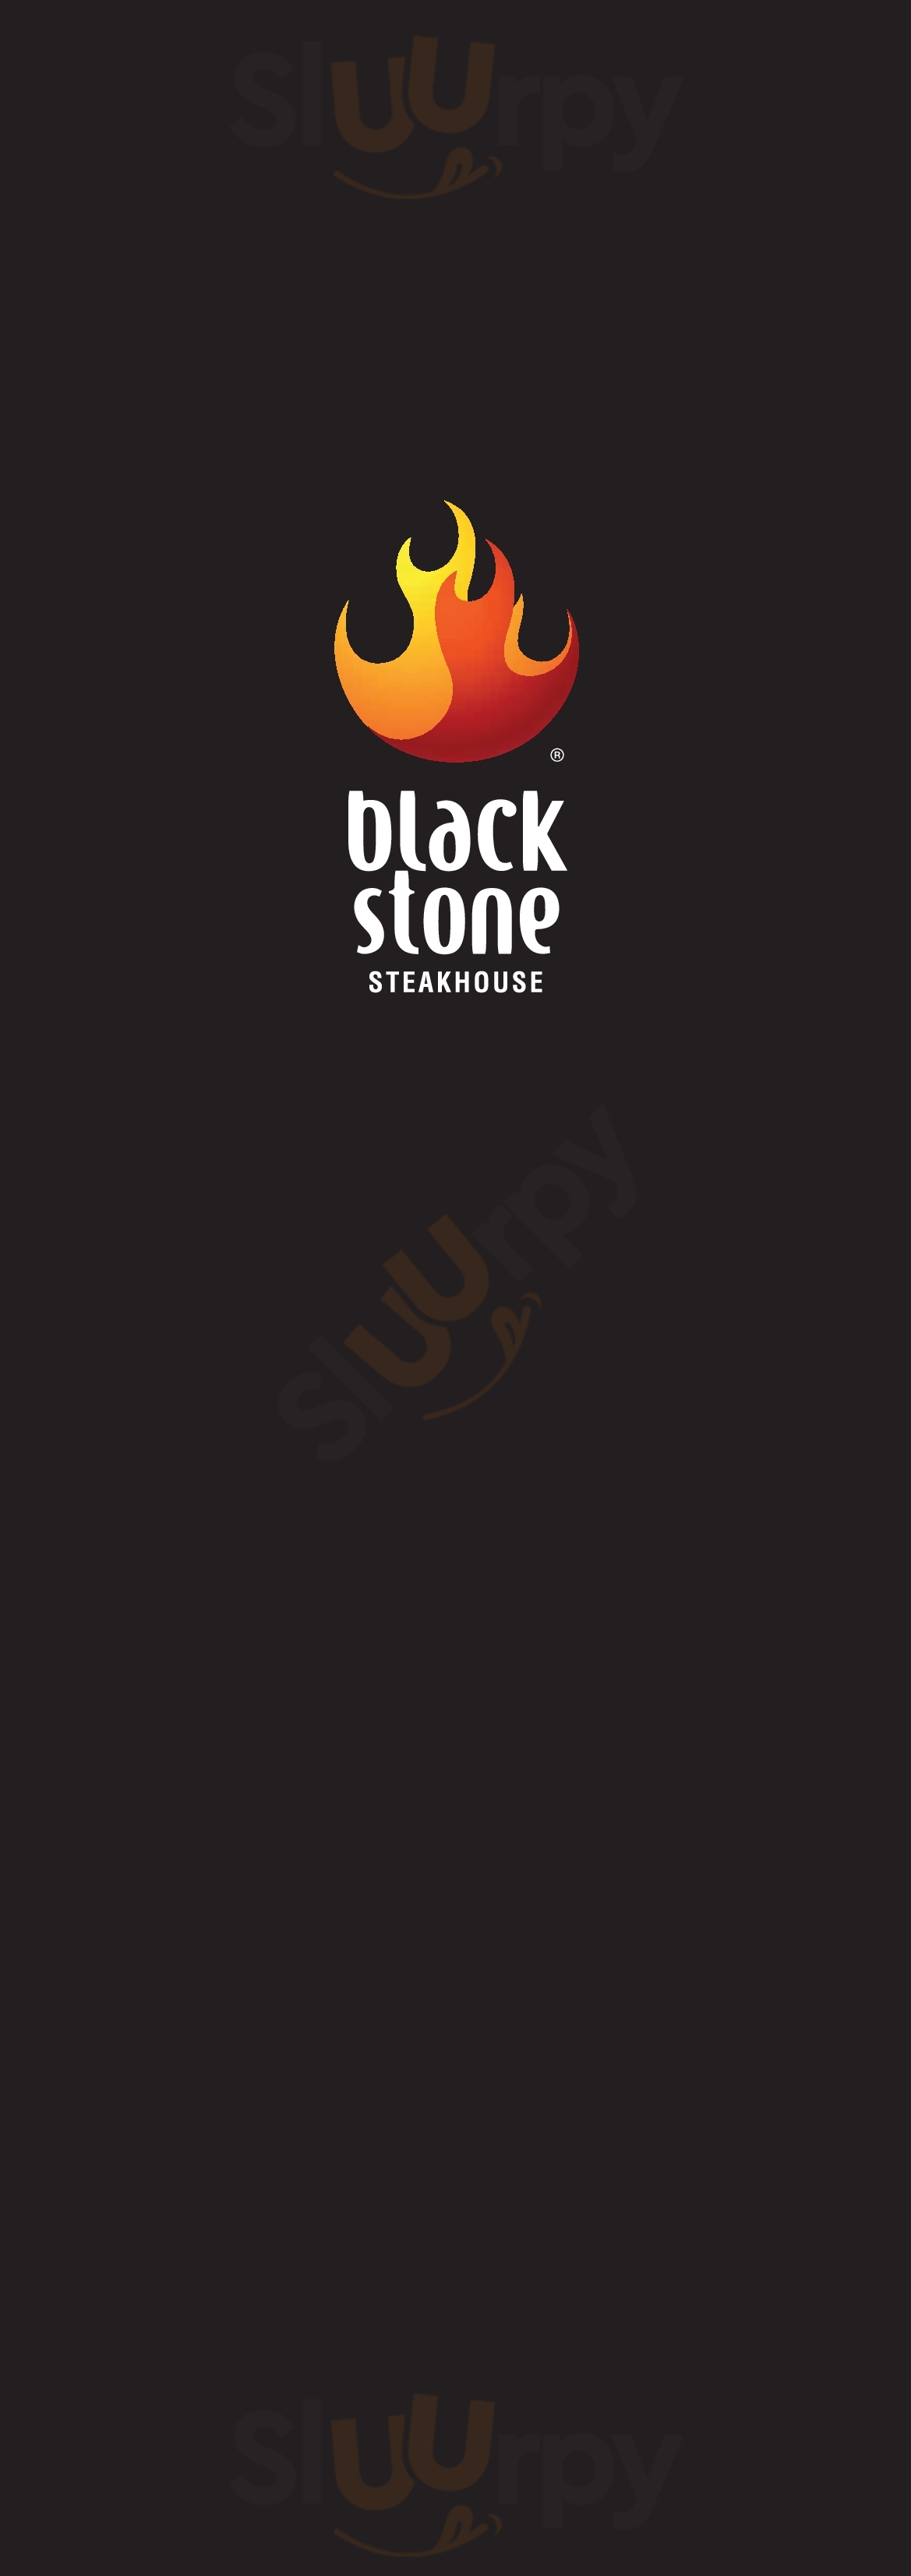 Blackstone Steakhouse - Borlange Borlänge Menu - 1